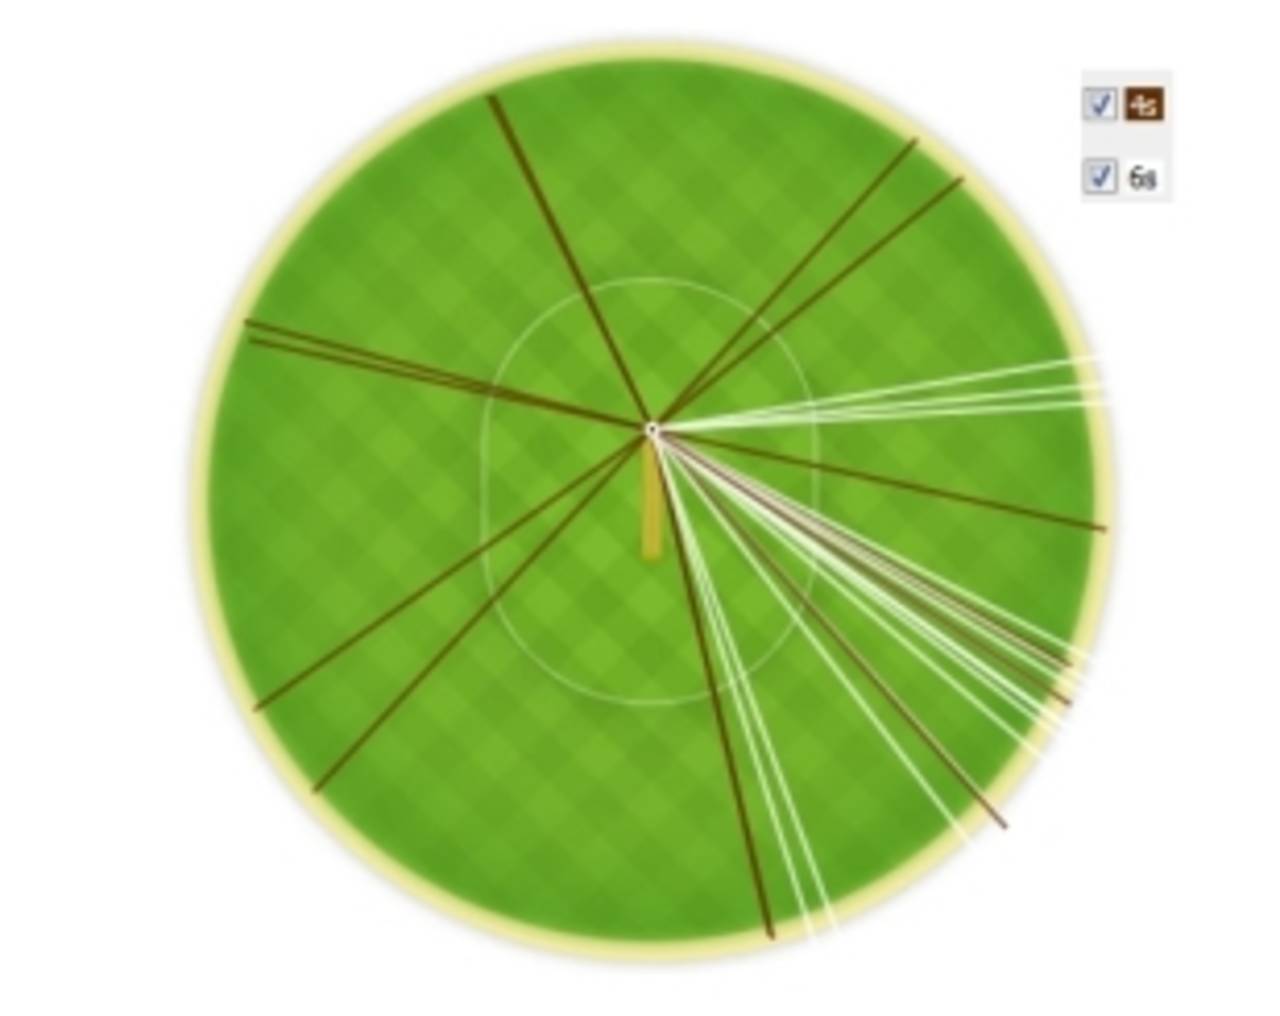 Shane Watson's wagon-wheel of boundaries in his 96-ball 185 not out, Bangladesh v Australia, Mirpur, April 11, 2011